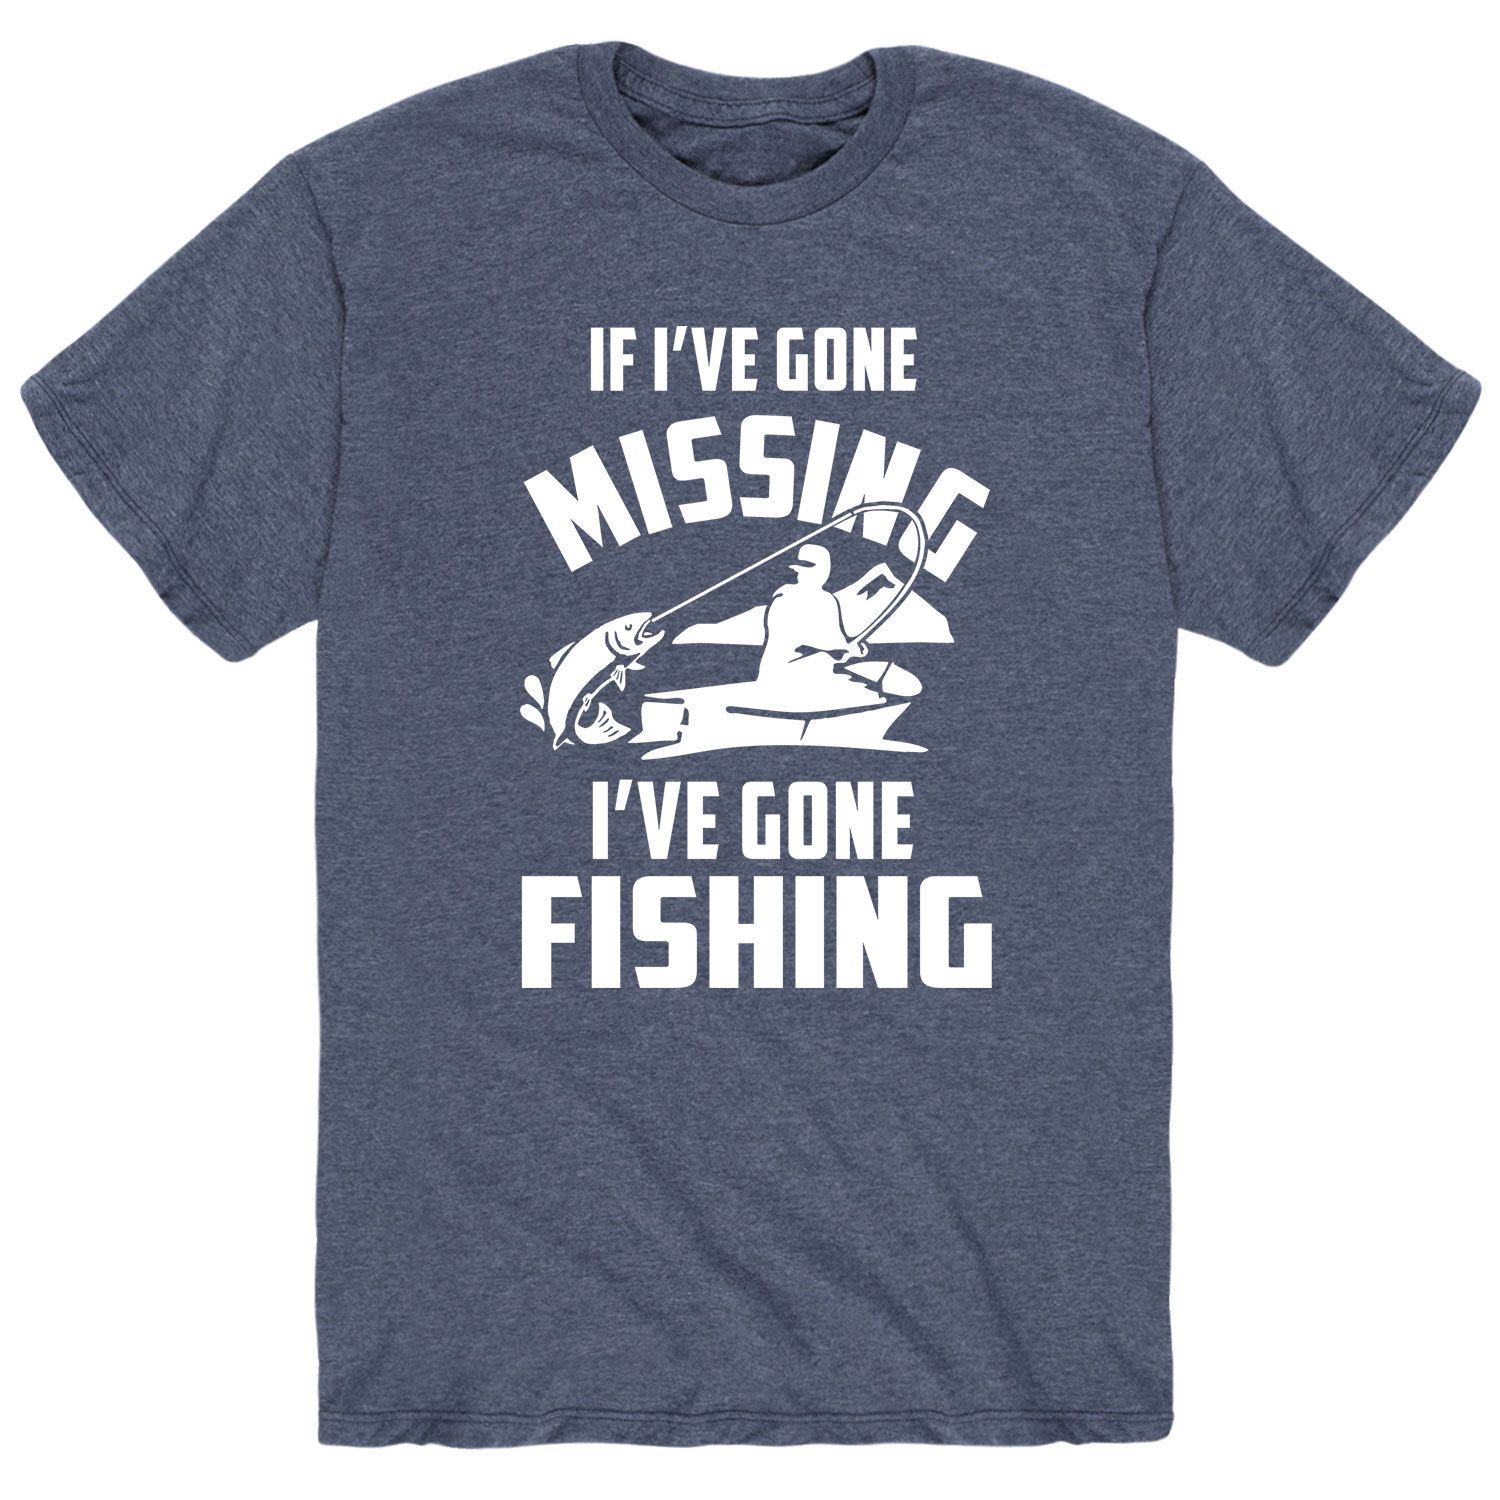 

Мужская футболка для рыбалки «If Ive Gone Missing» Licensed Character